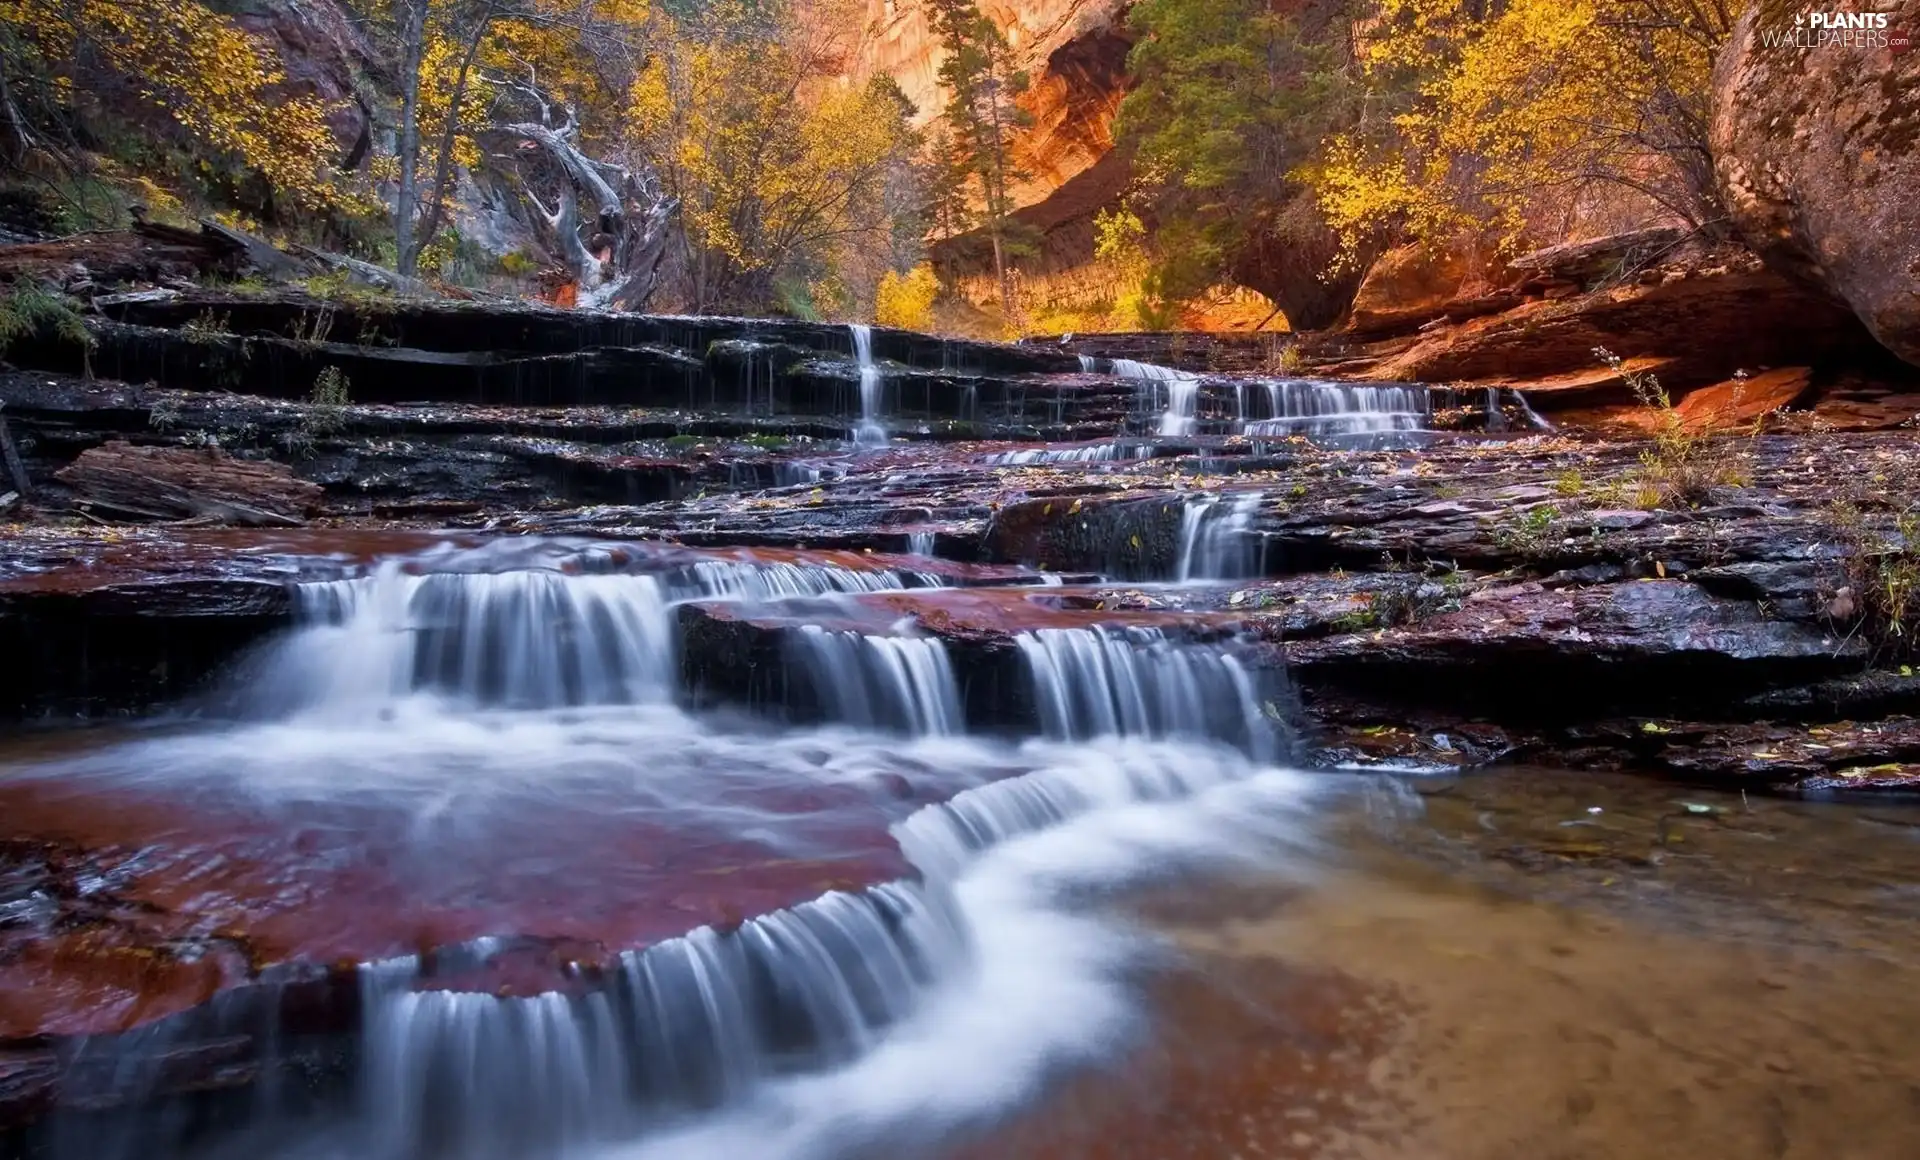 Forest, autumn, waterfall, ##, rocks